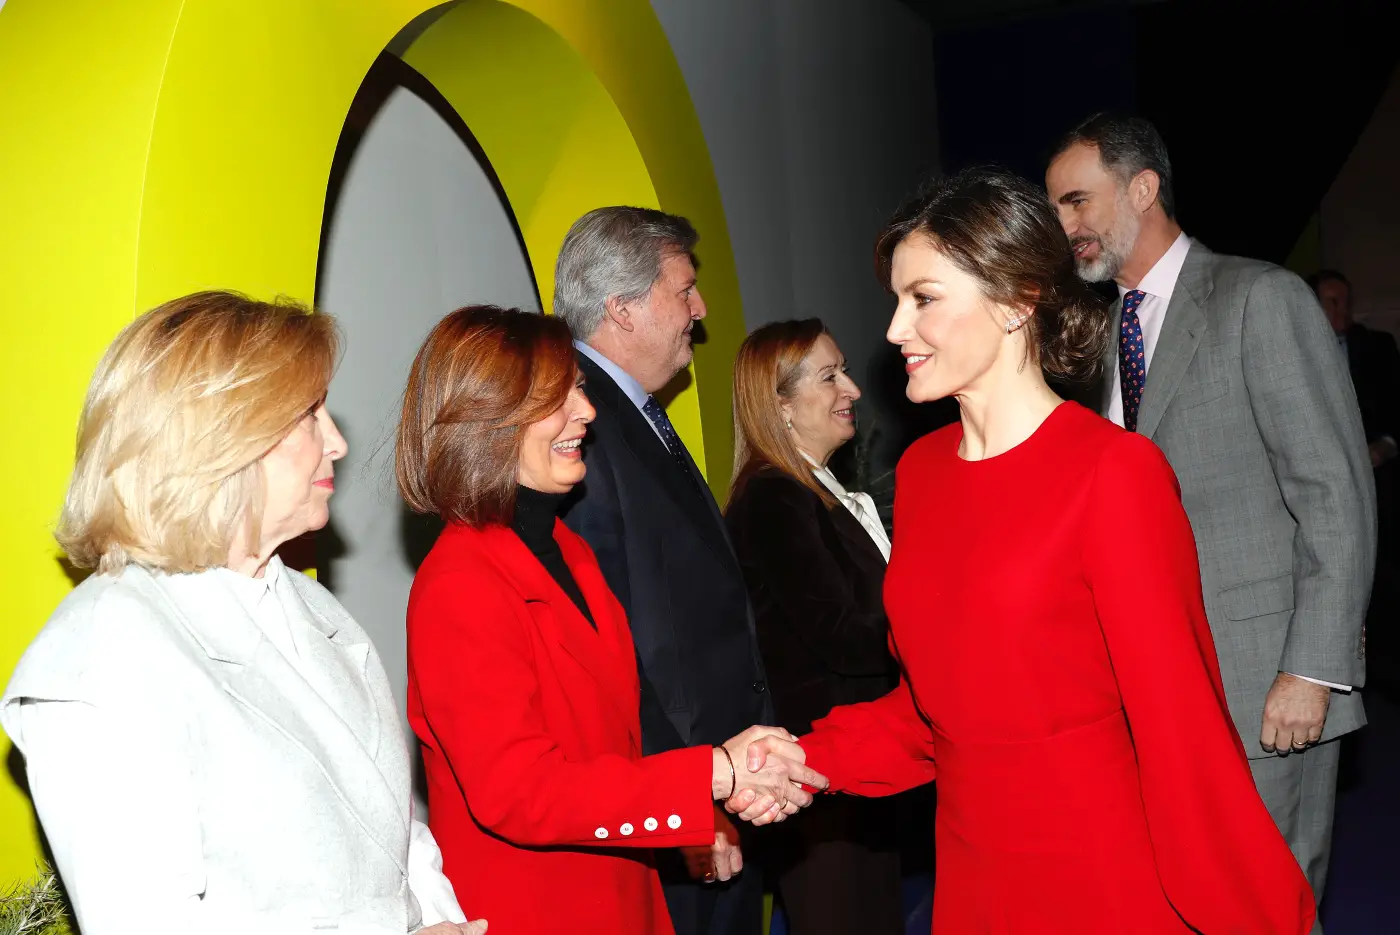 The Spanish Royal Couple inaugurated International Art Fair- ARCO Madrid